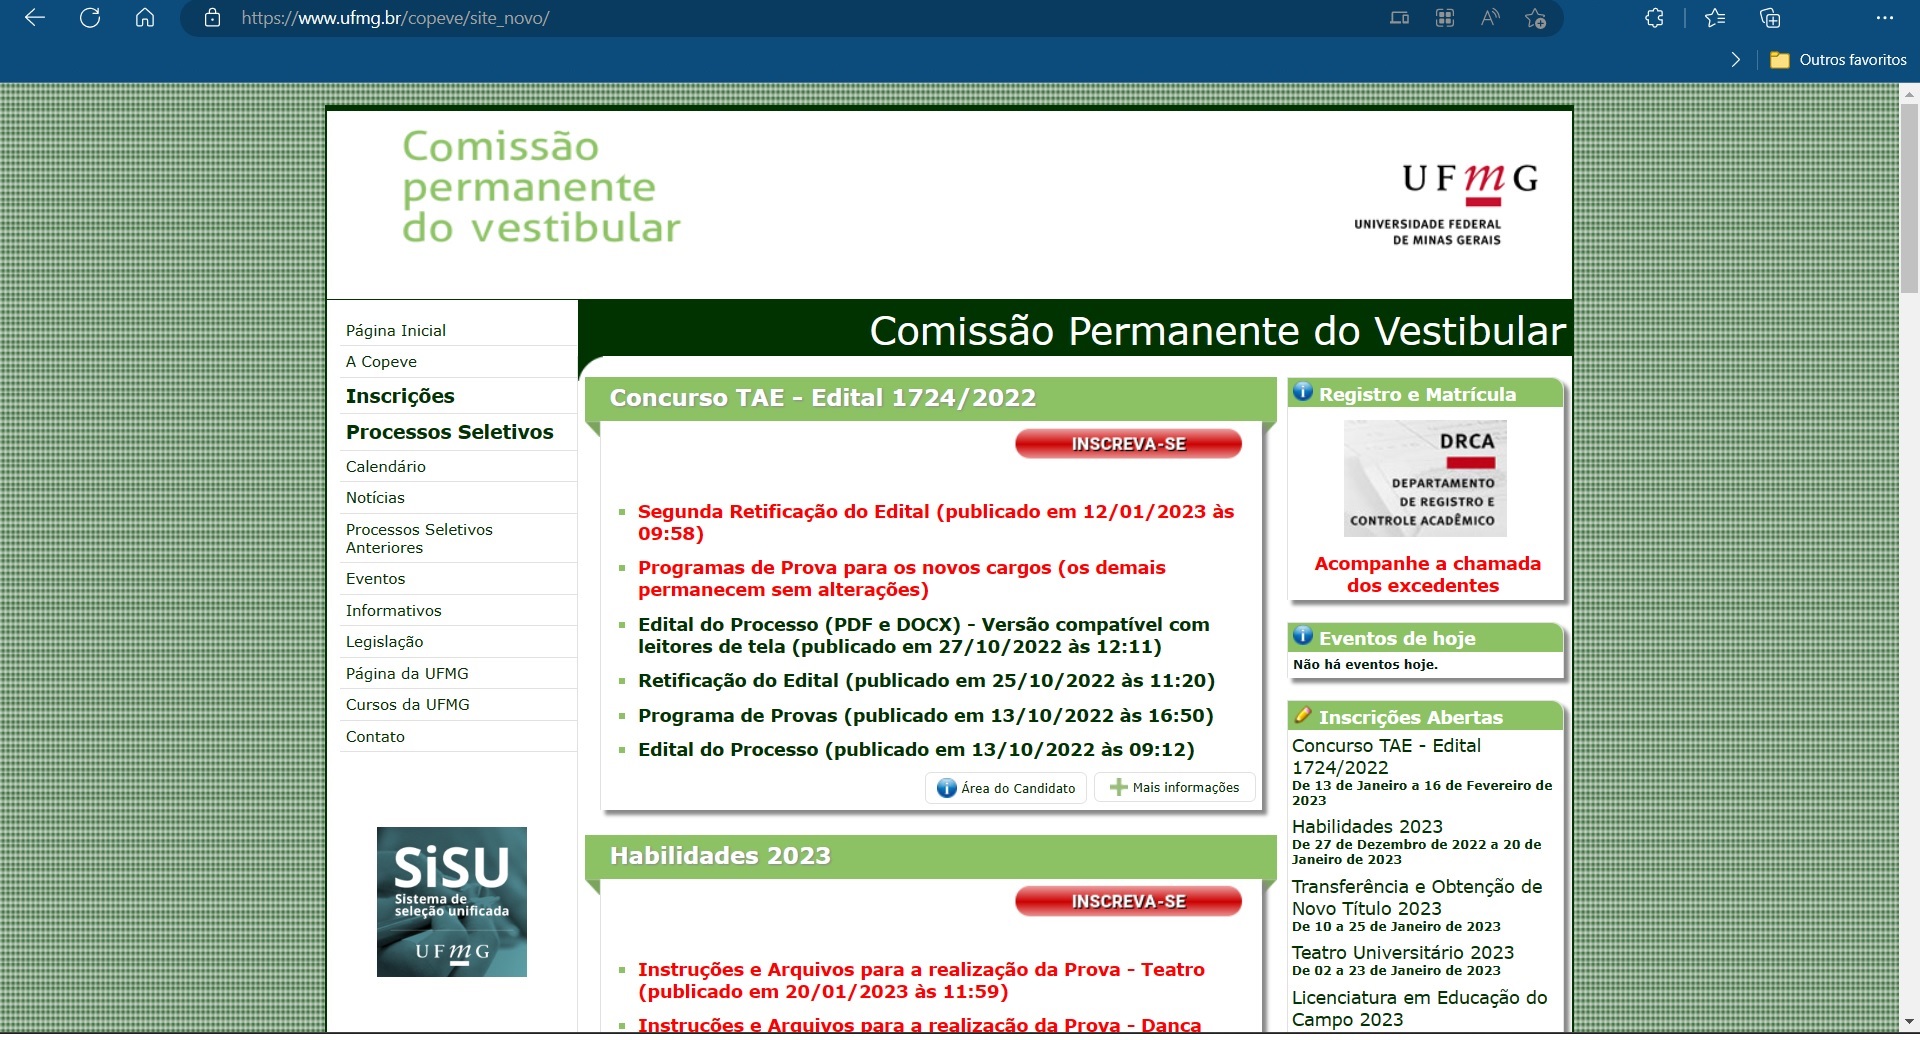 UFMG: NOTAS DE CORTE NO SISU 2022 